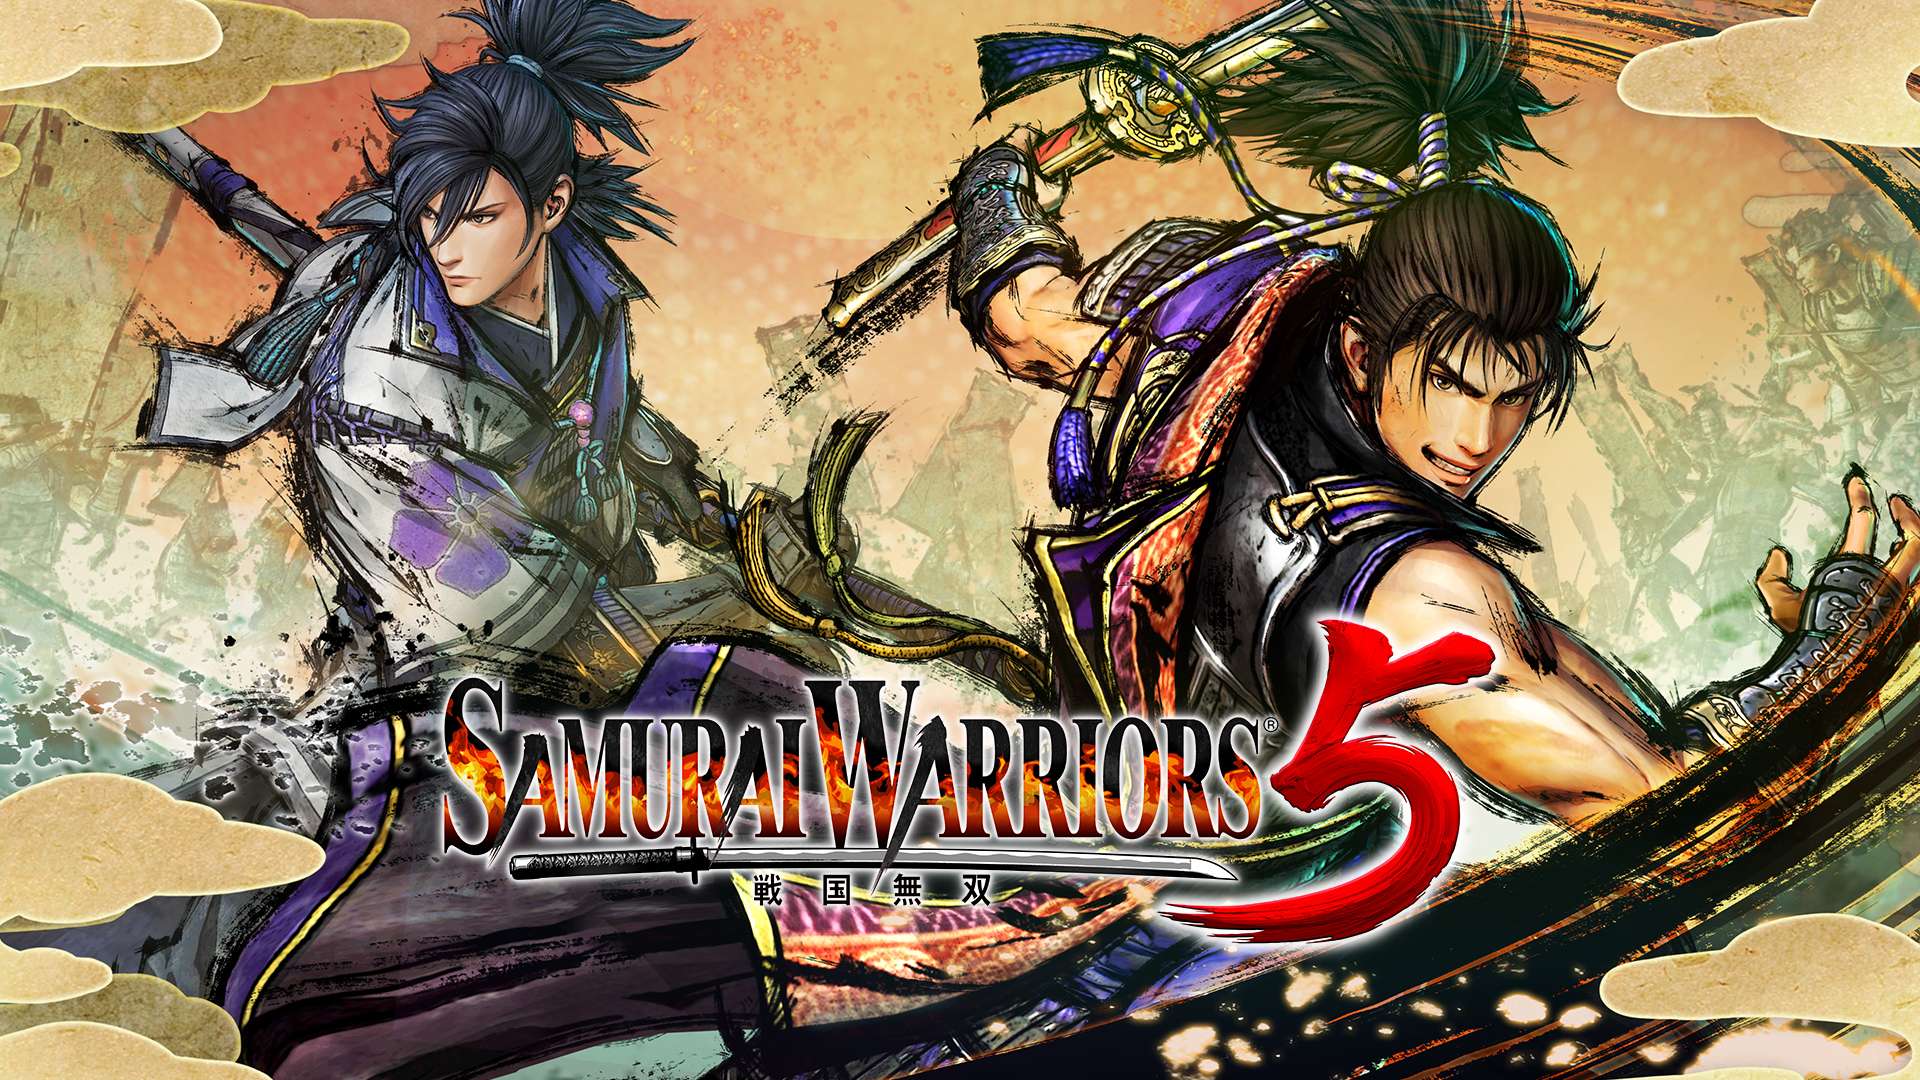 Samurai Warriors 5 publica su tráiler definitivo